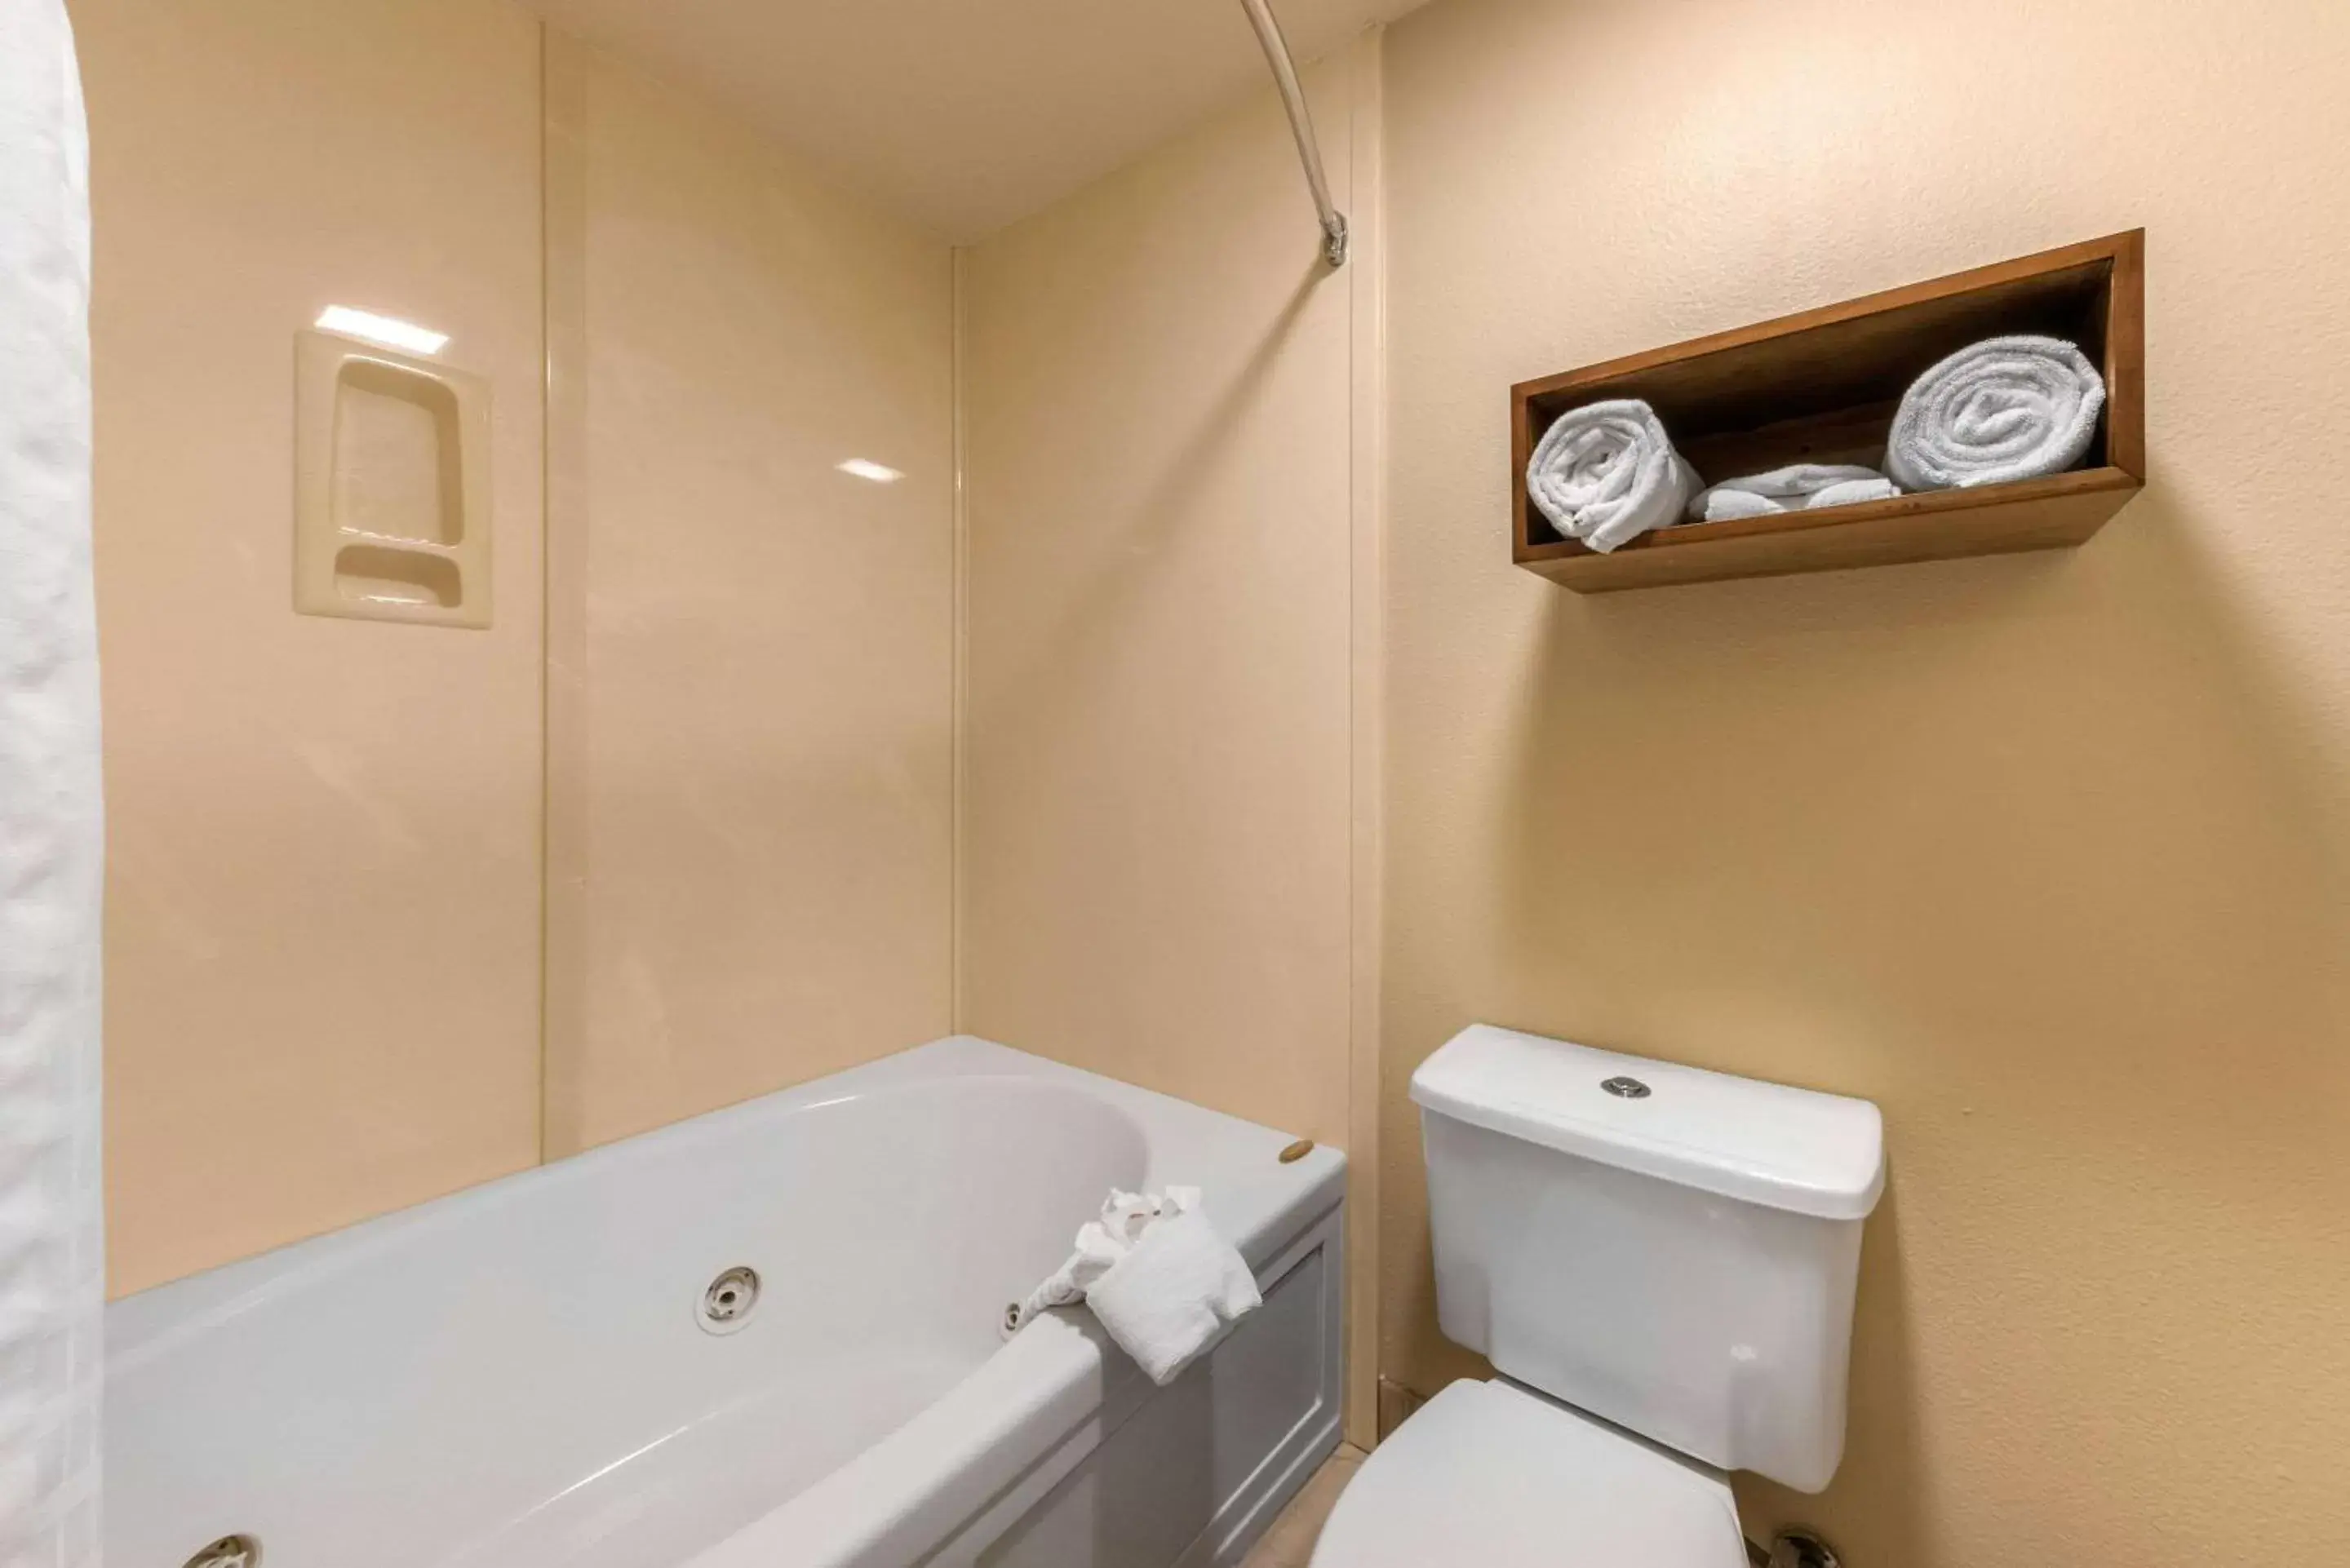 Photo of the whole room, Bathroom in Comfort Inn South San Jose - Morgan Hill